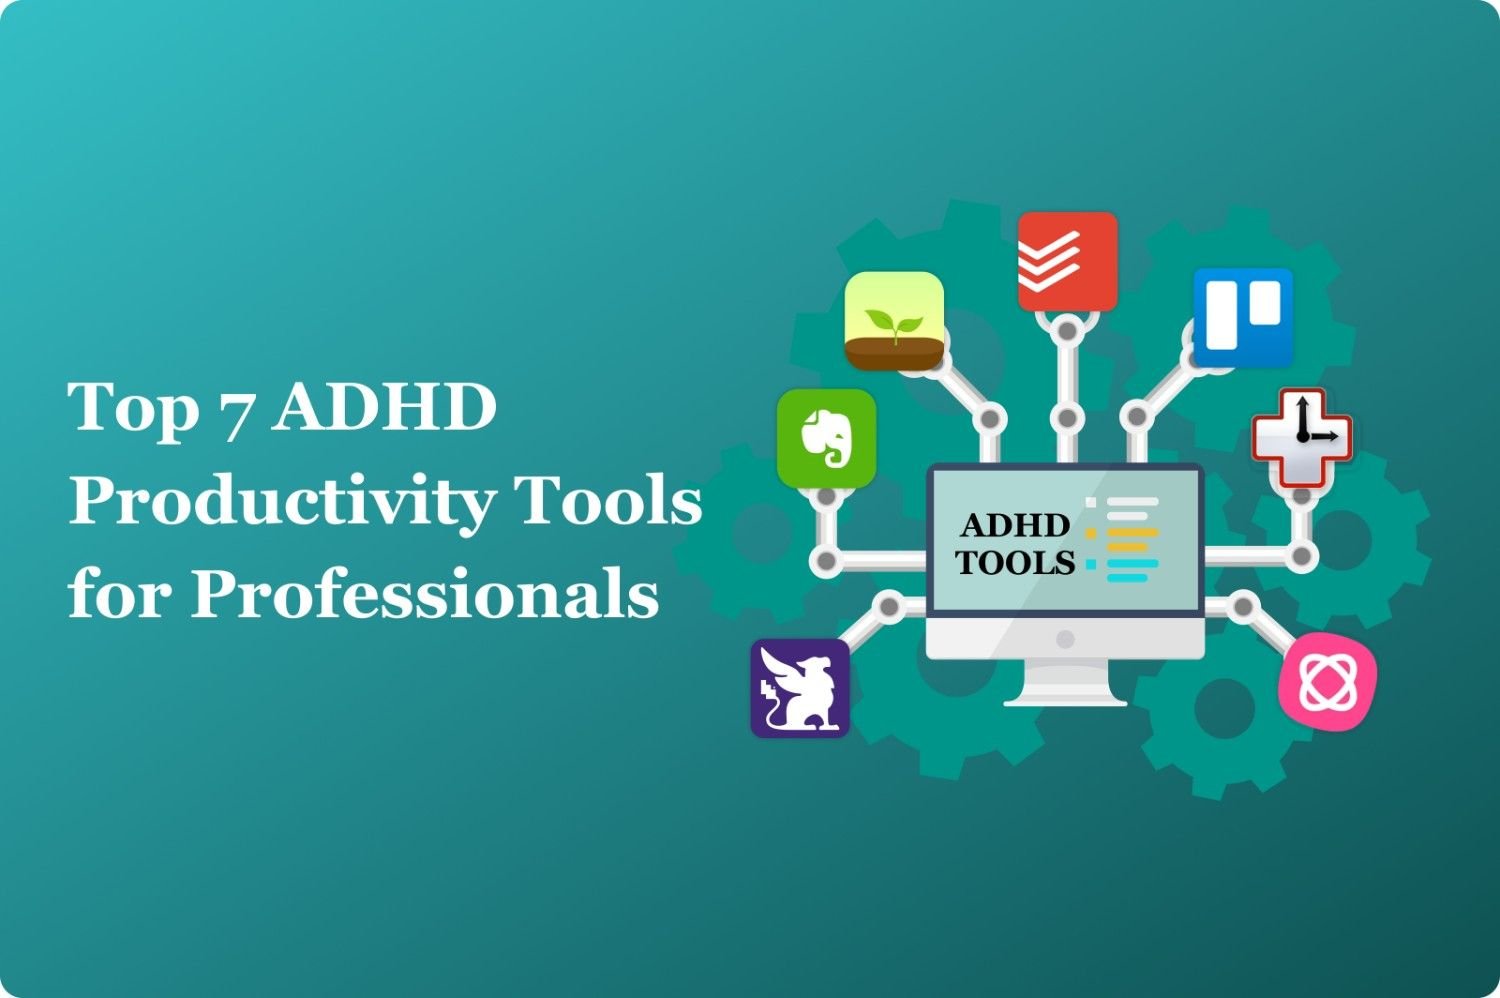 Top 7 ADHD Productivity Tools for Professionals